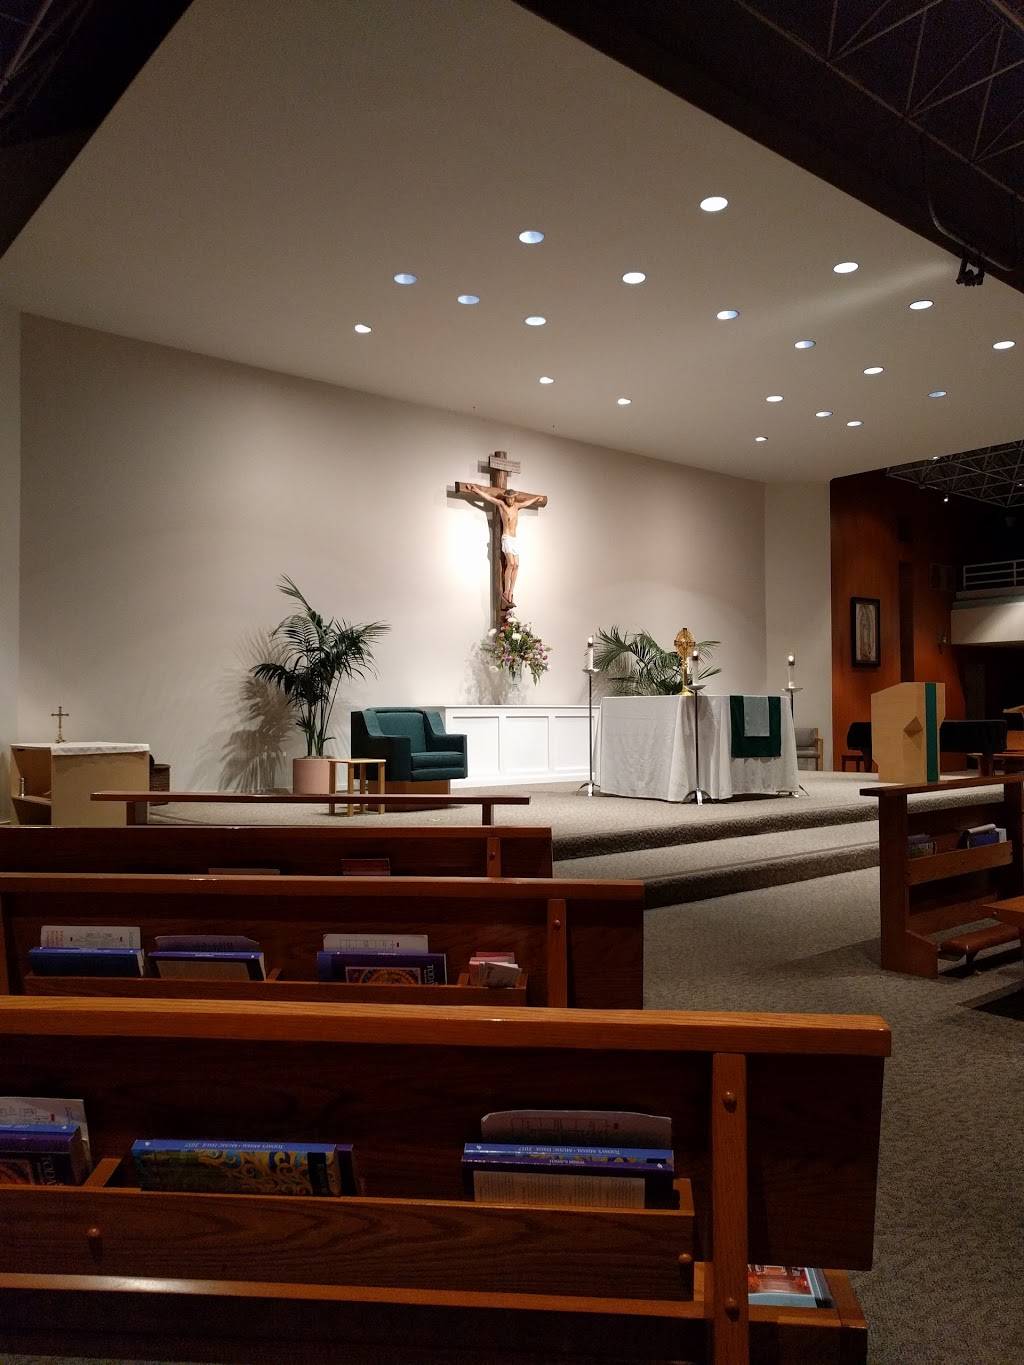 Saint Hedwig Catholic Church | 11482 Los Alamitos Blvd, Los Alamitos, CA 90720, USA | Phone: (562) 296-9000